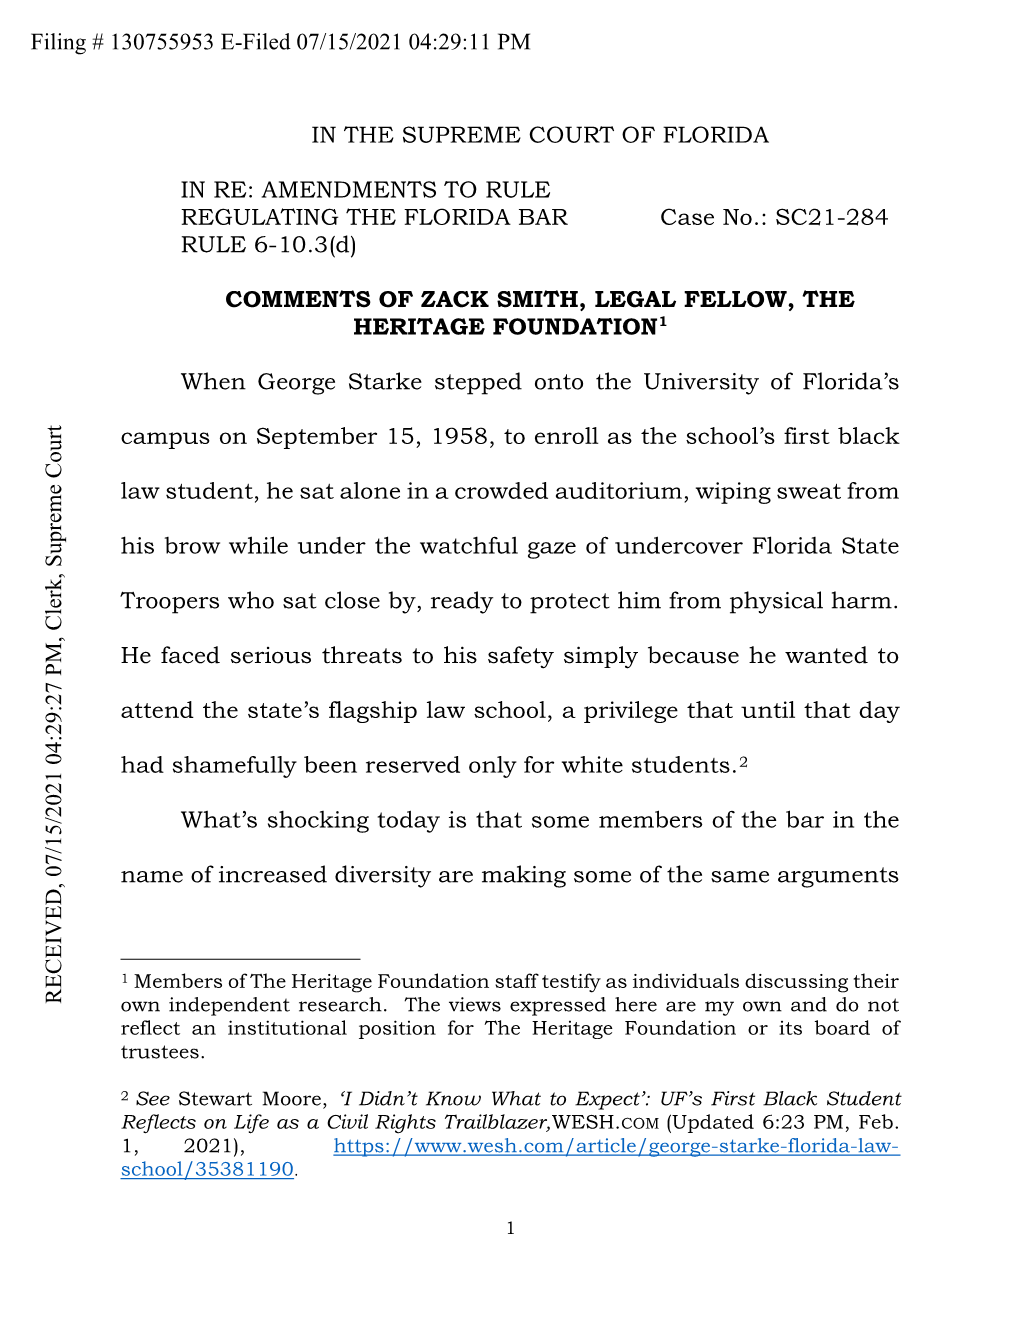 AMENDMENTS to RULE REGULATING the FLORIDA BAR Case No.: SC21-284 RULE 6-10.3(D) COMMENTS